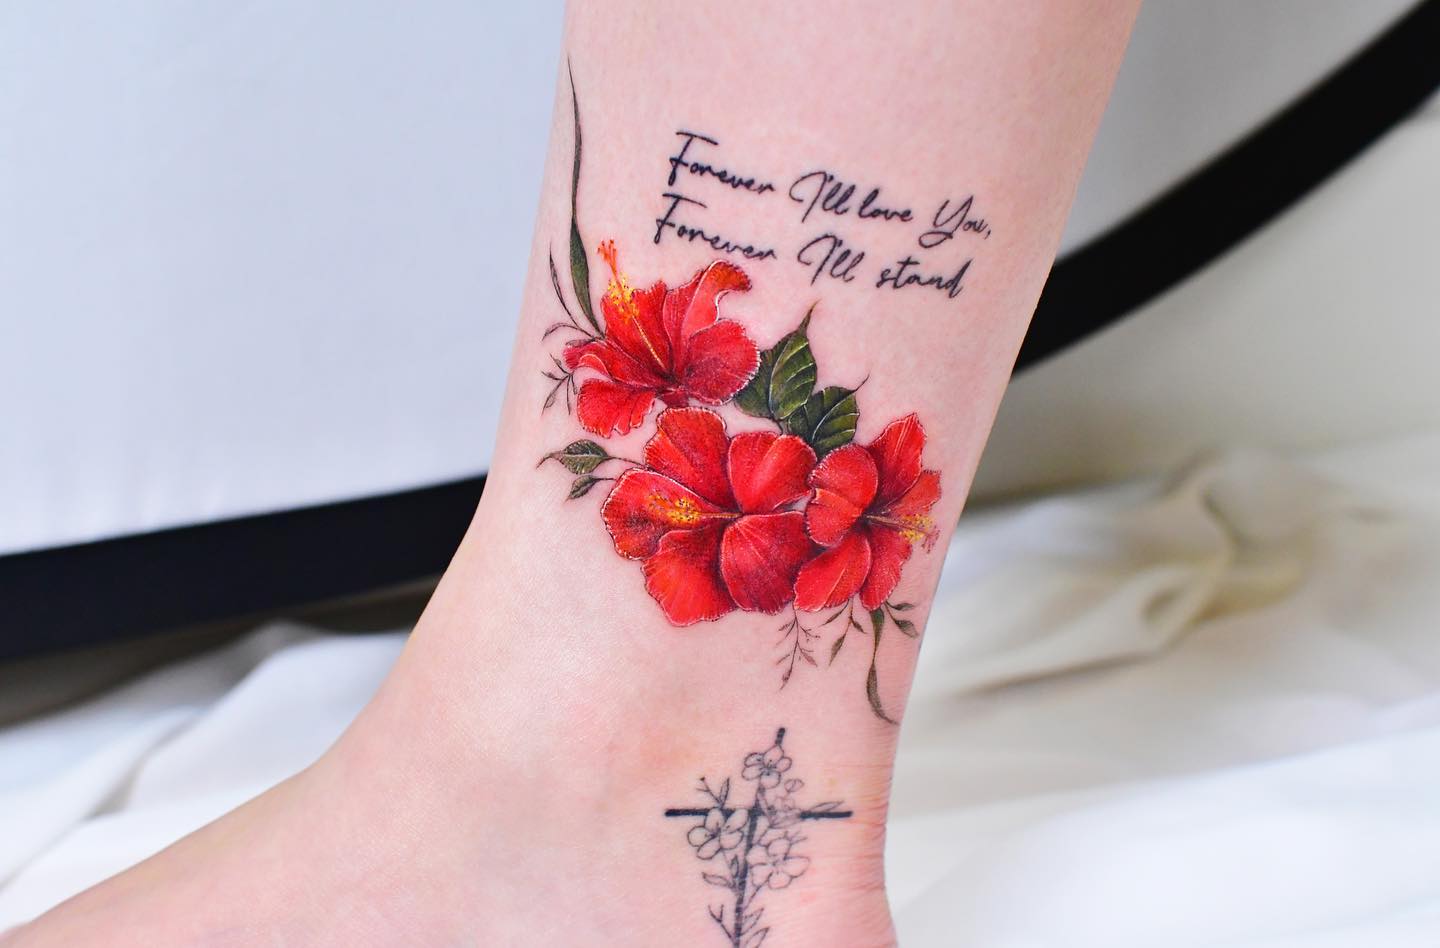 Tatuaje de tobillo de flor roja.